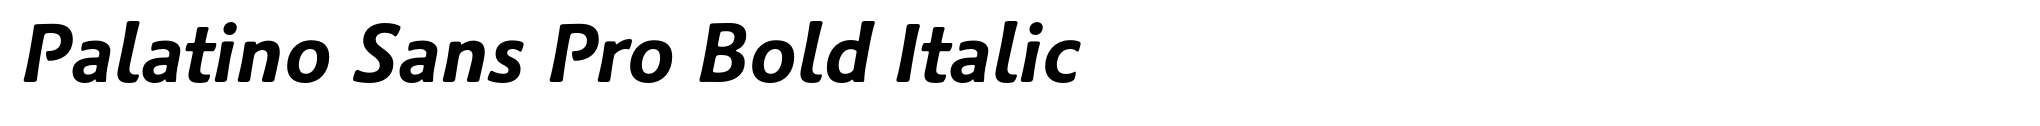 Palatino Sans Pro Bold Italic image